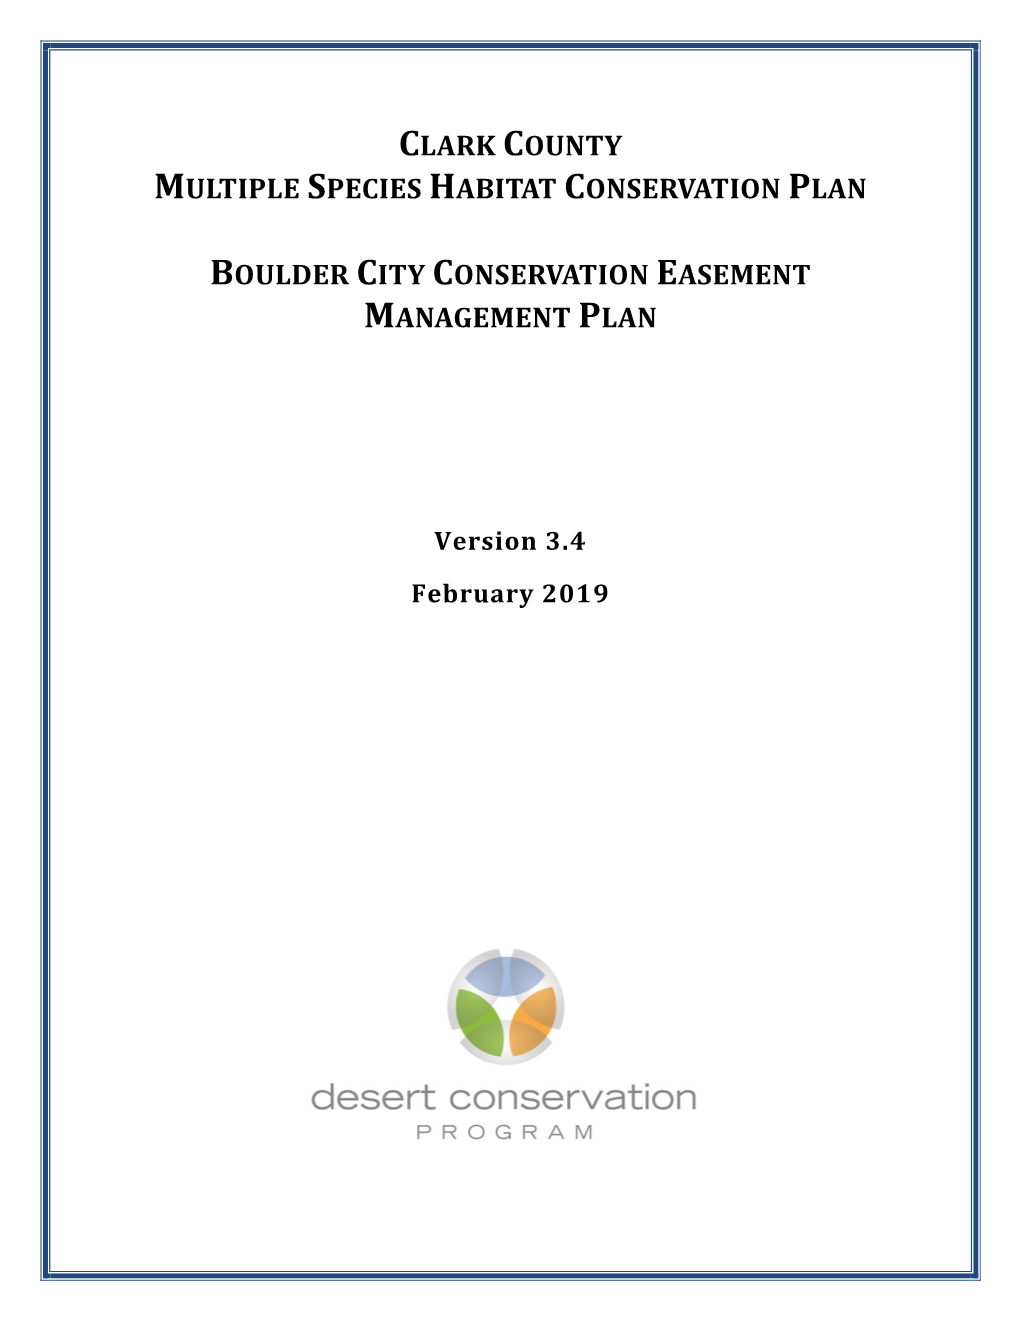 Clark County Multiple Species Habitat Conservation Plan